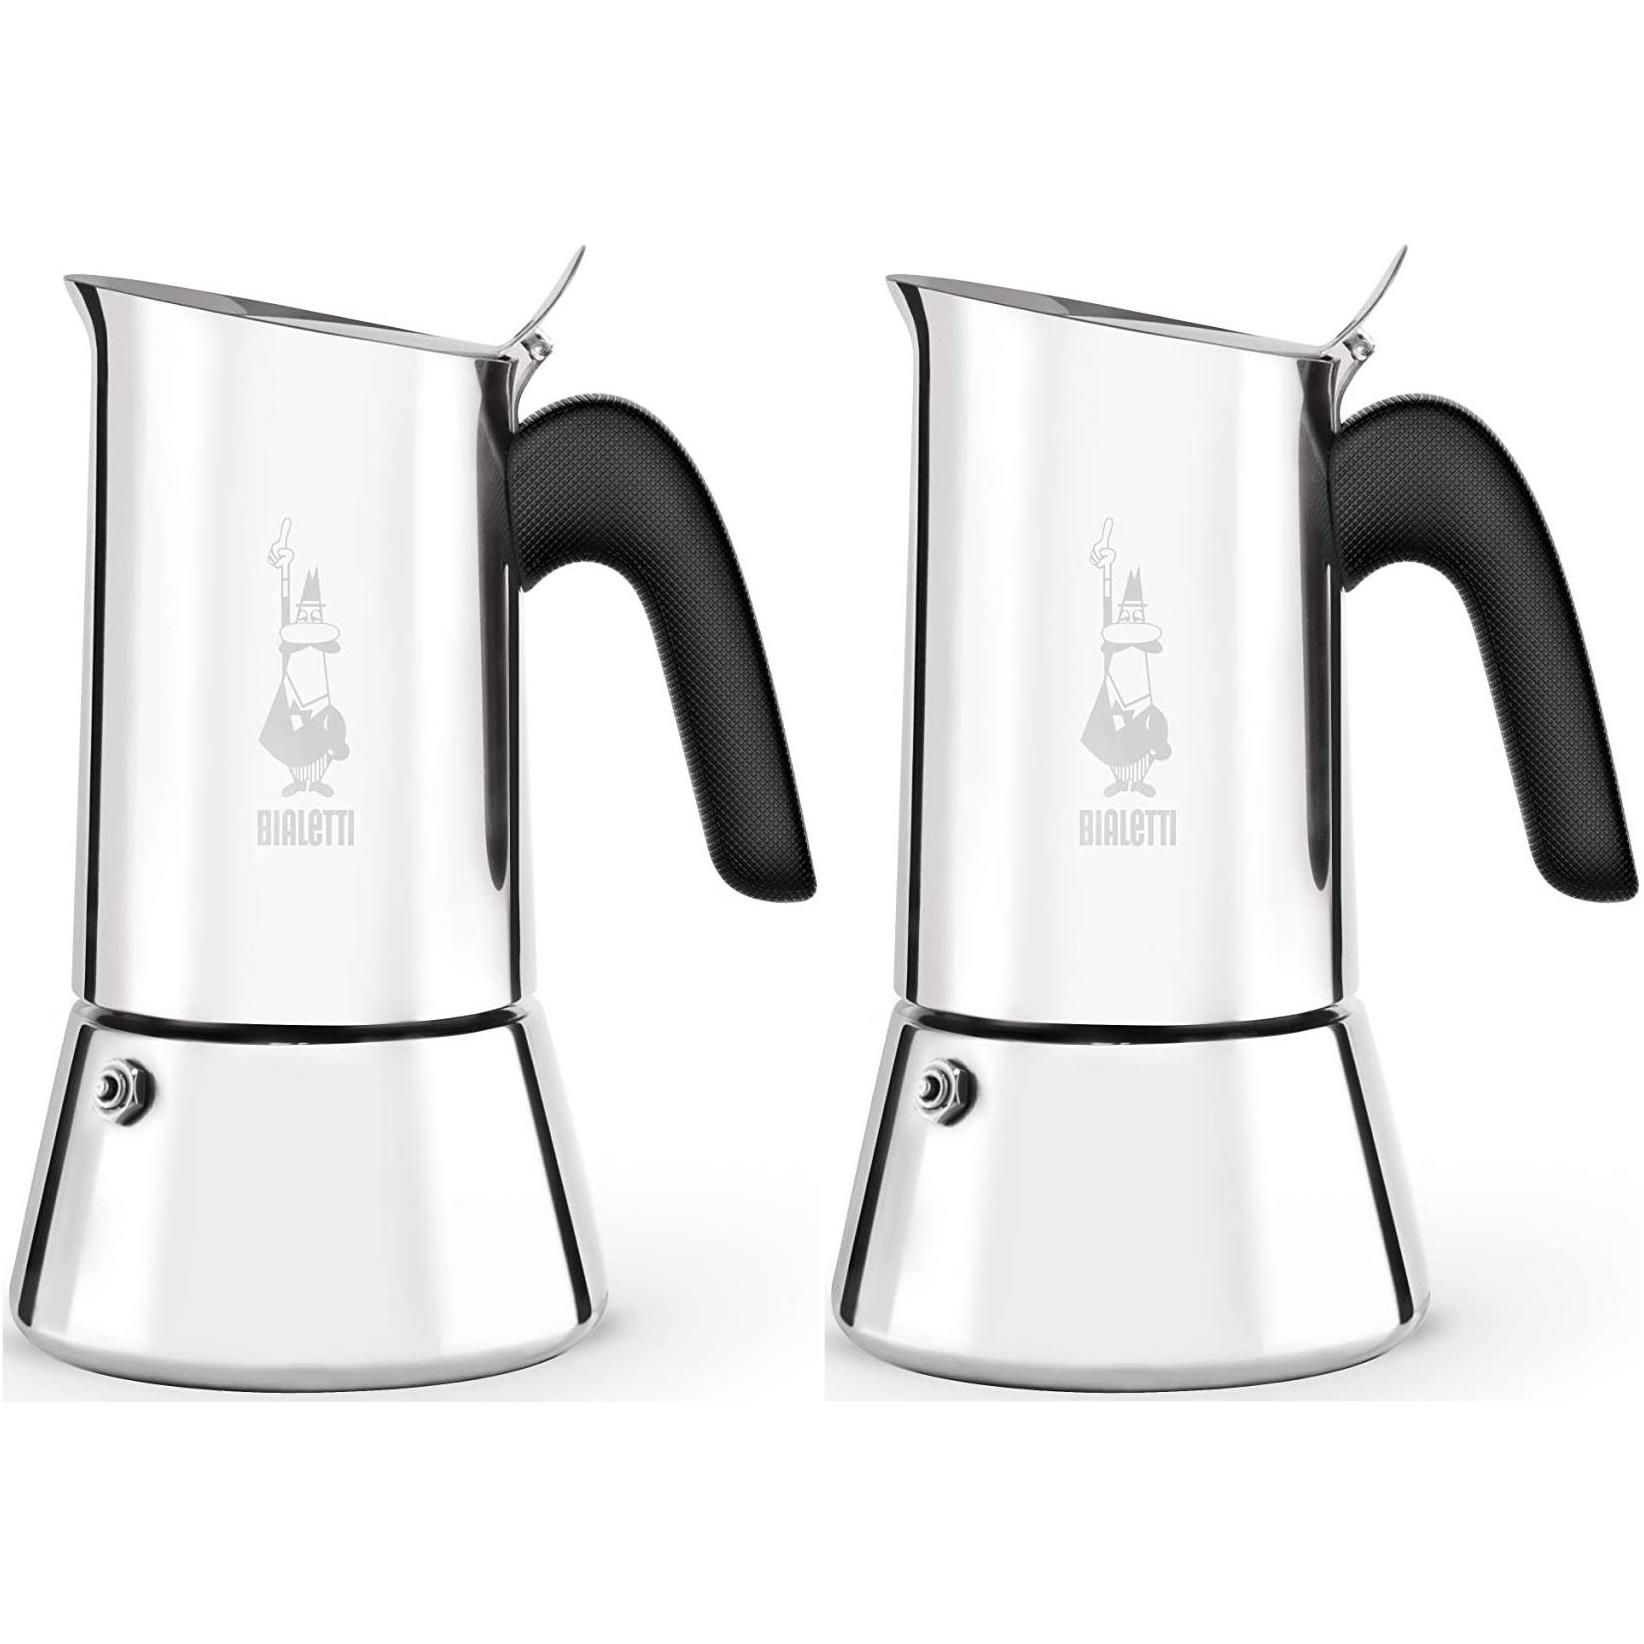  Bialetti Venus 2 Cup Stainless Steel Espresso Maker : Home &  Kitchen